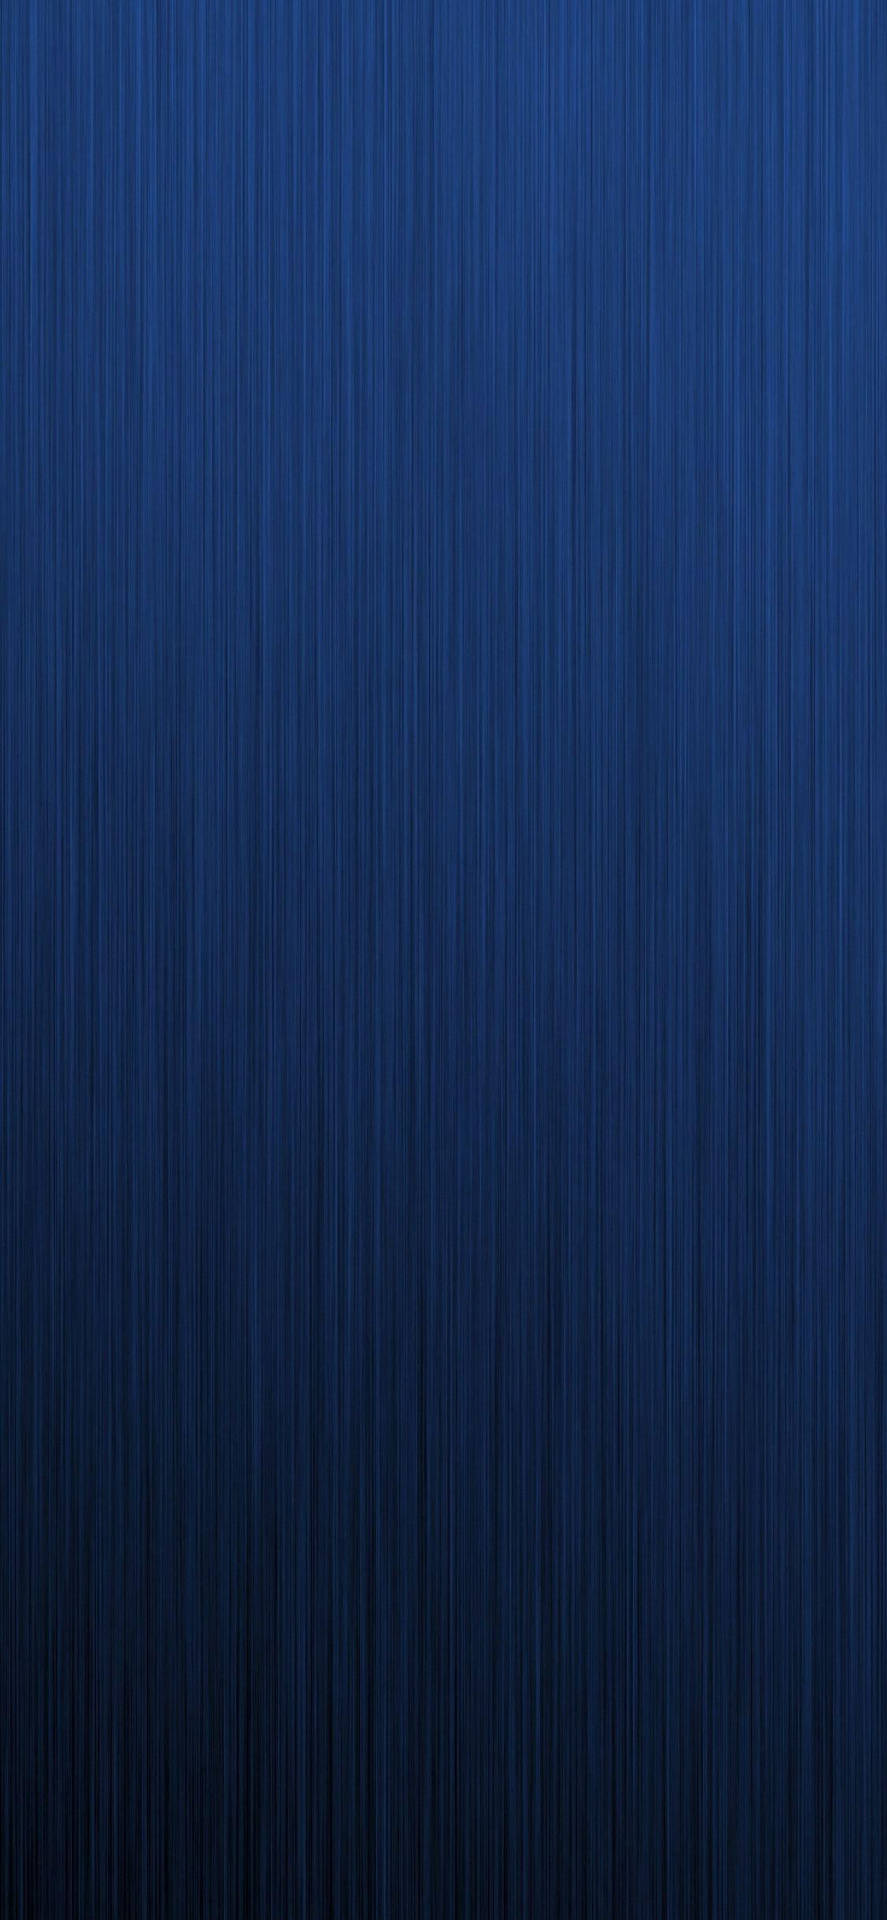 Brushed Metal Blue Iphone Wallpaper